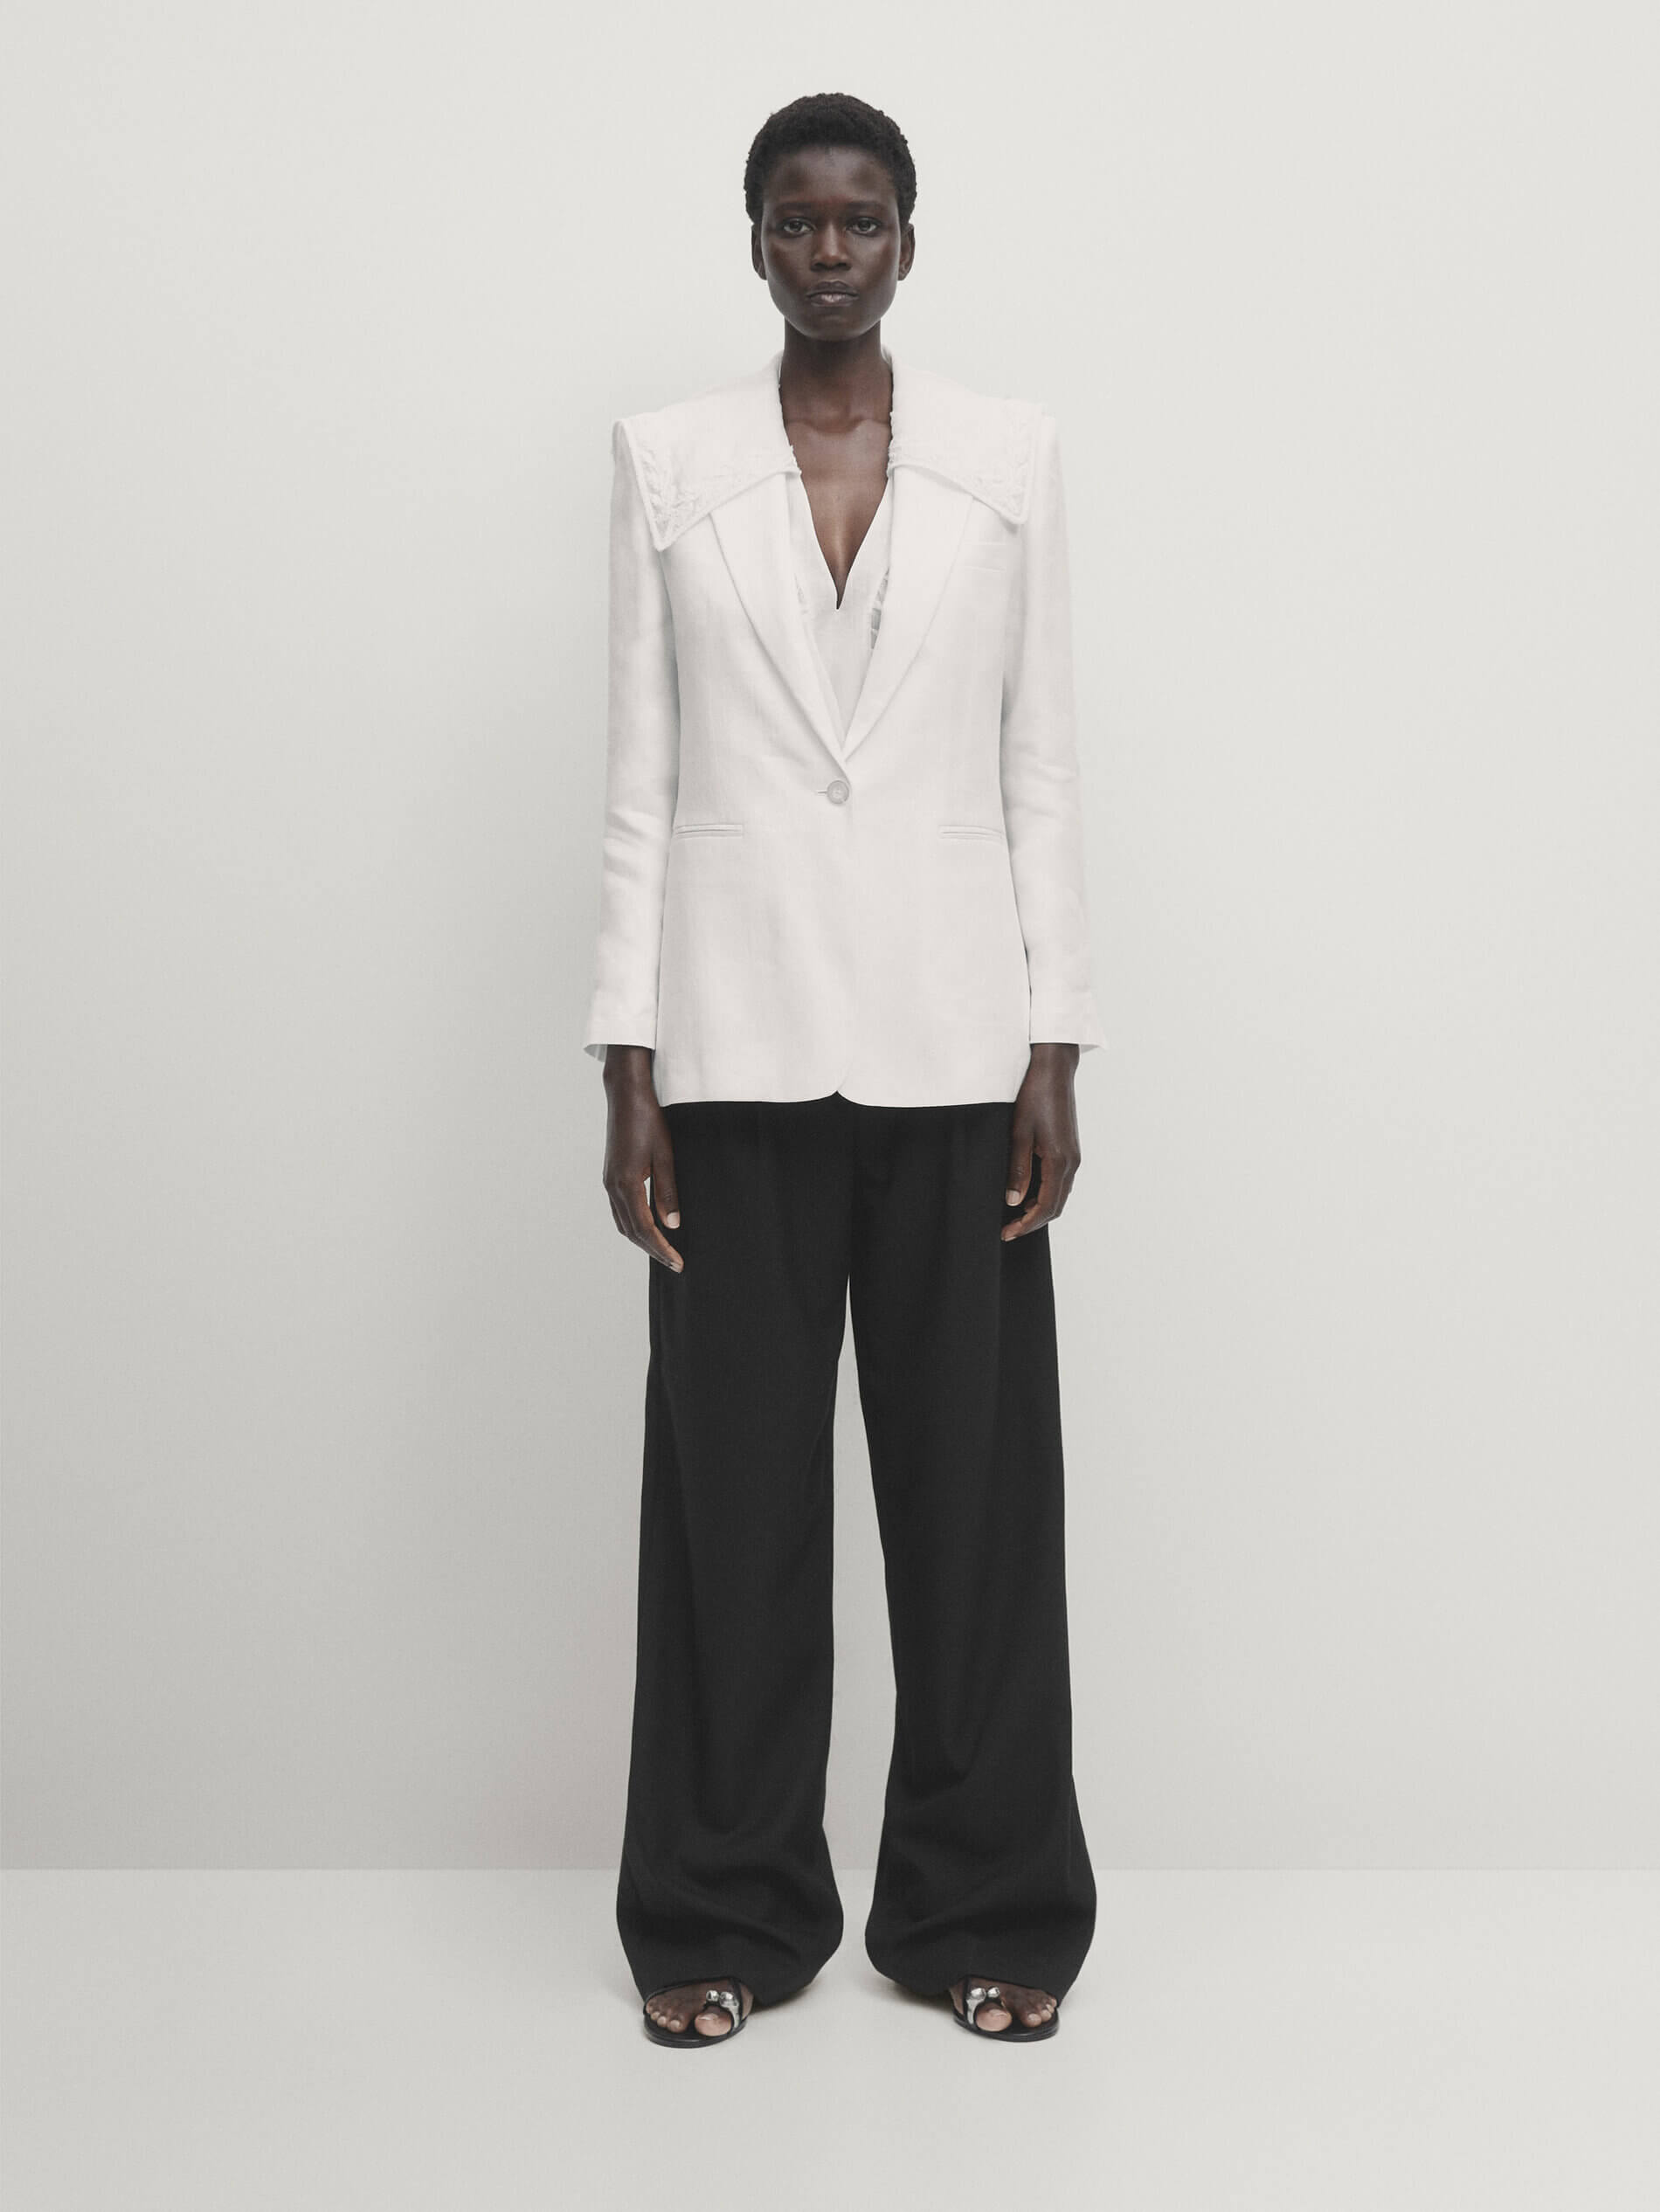 Пиджак Massimo Dutti Linen, белый пиджак massimo dutti deconstructed 100% linen suit темно коричневый